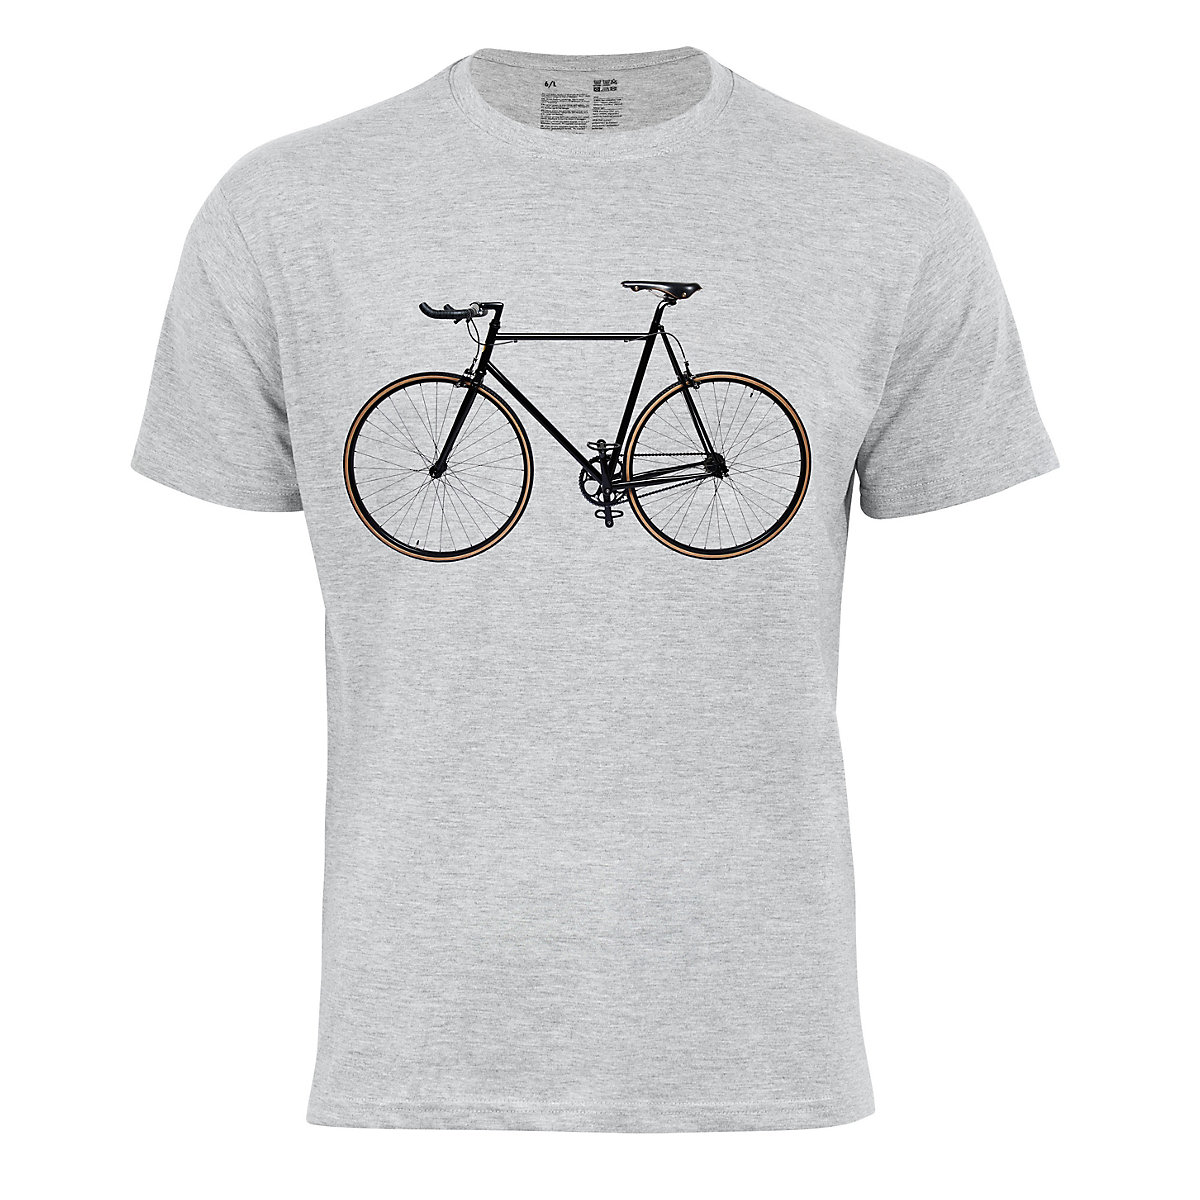 Cotton Prime T-Shirt Bike Fahrrad T-Shirts grau